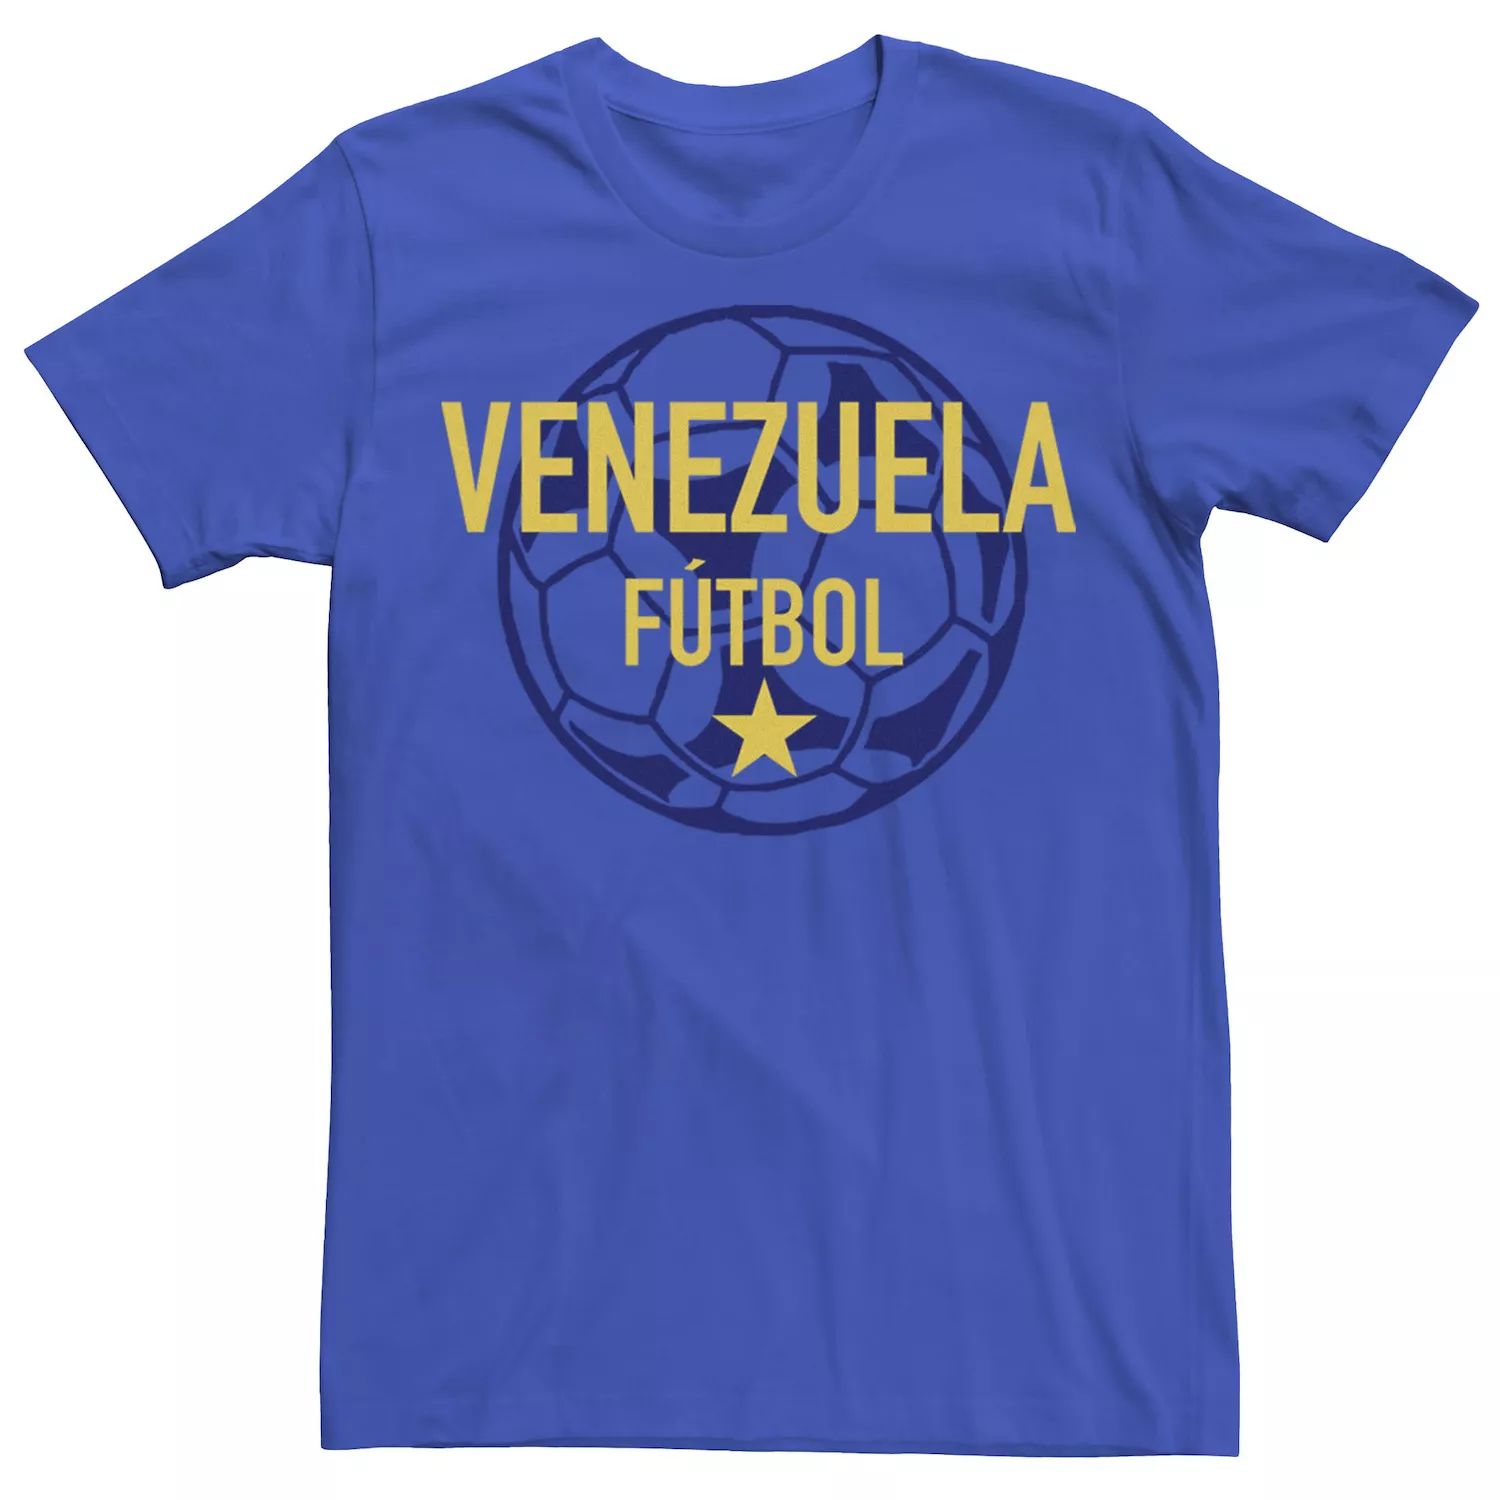 Мужская футболка с логотипом Венесуэлы Futbol Licensed Character